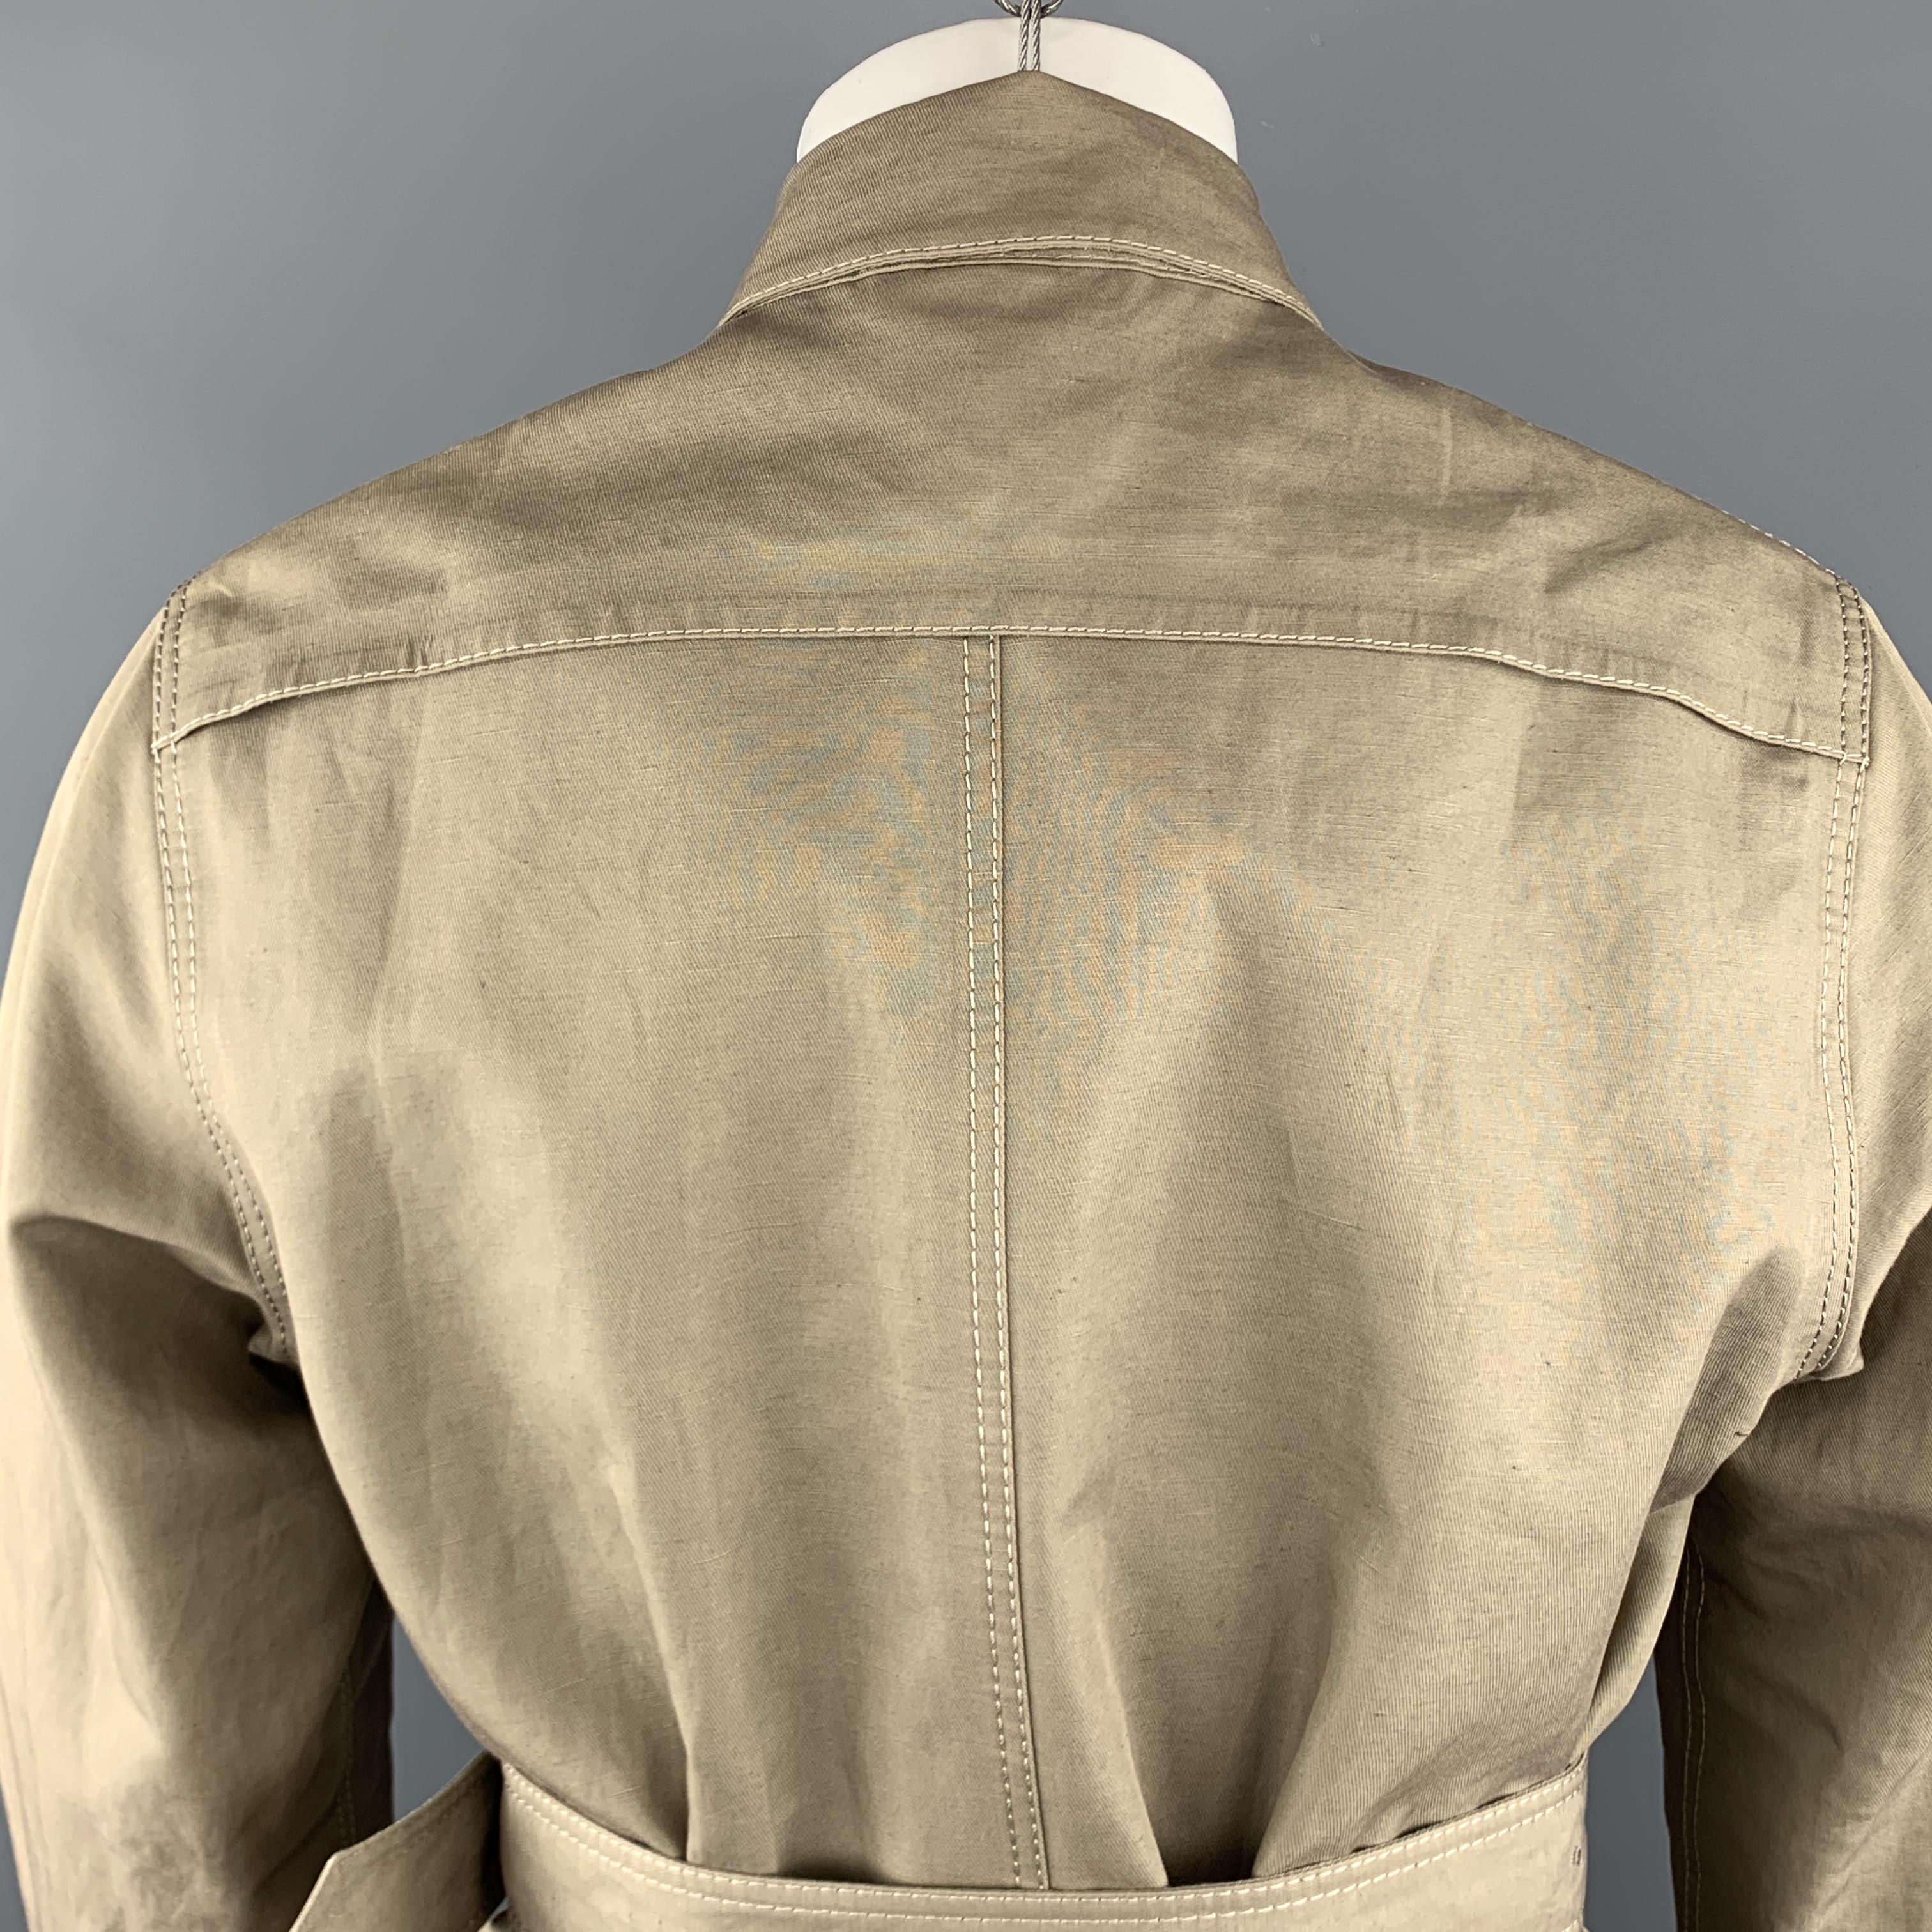 BURBERRY PRORSUM Size 36 Khaki Cotton / Linen Belted Trenchcoat $658.00 1